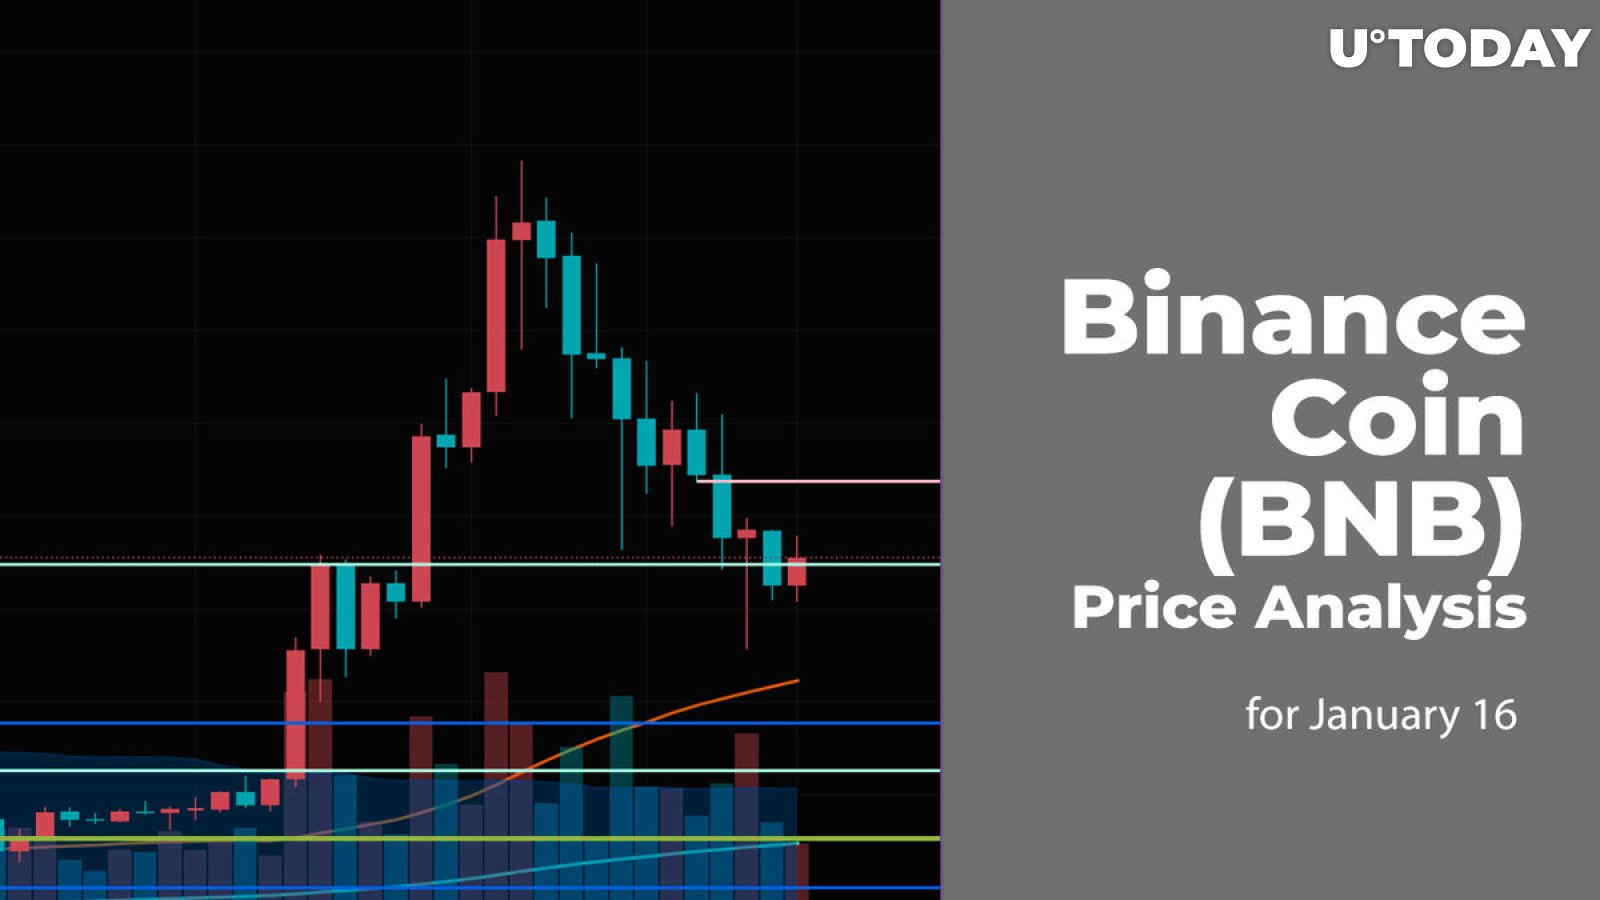 Binance Coin (BNB) Price Analysis for January 16